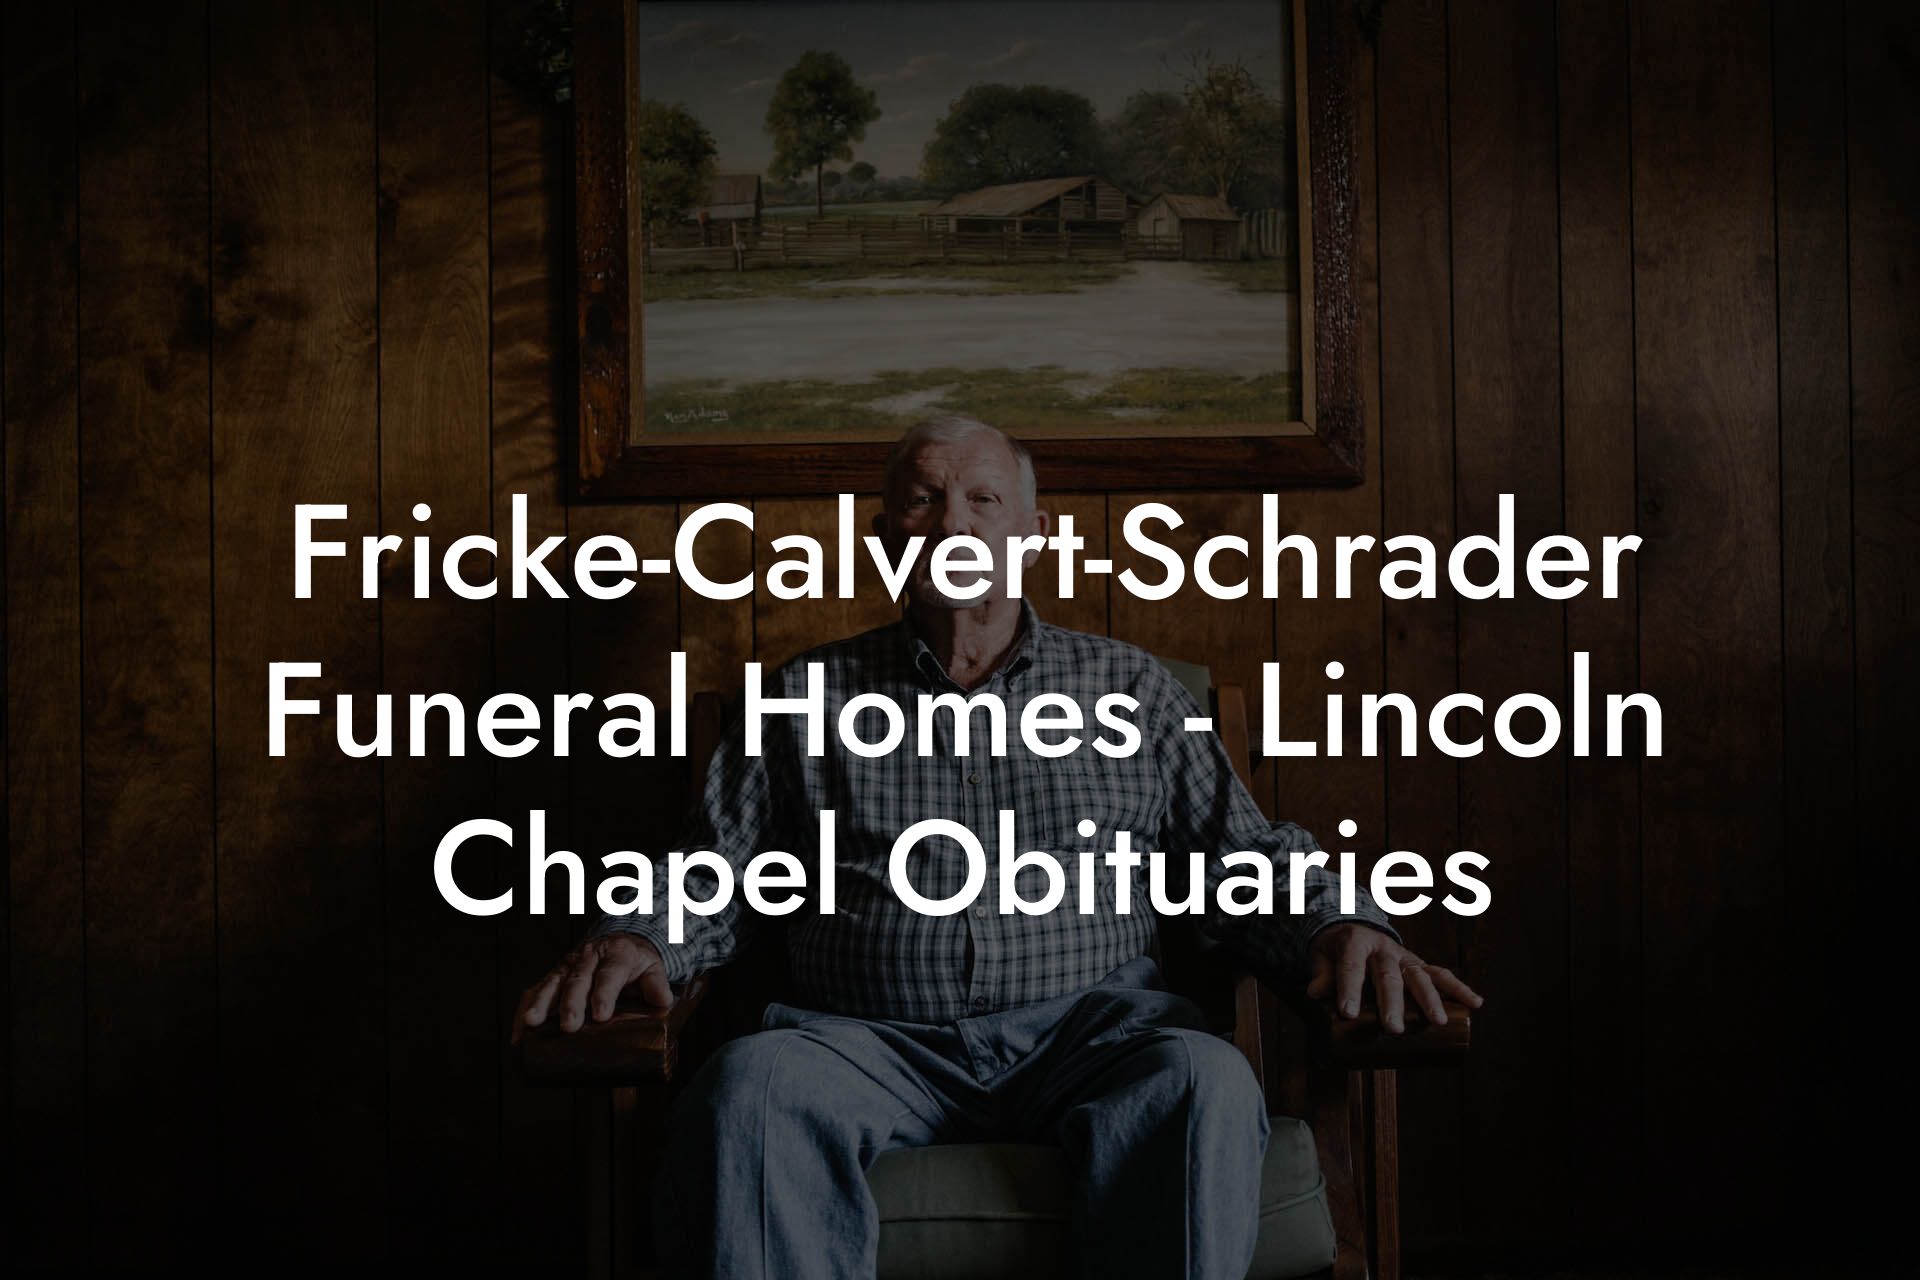 Fricke-Calvert-Schrader Funeral Homes - Lincoln Chapel Obituaries